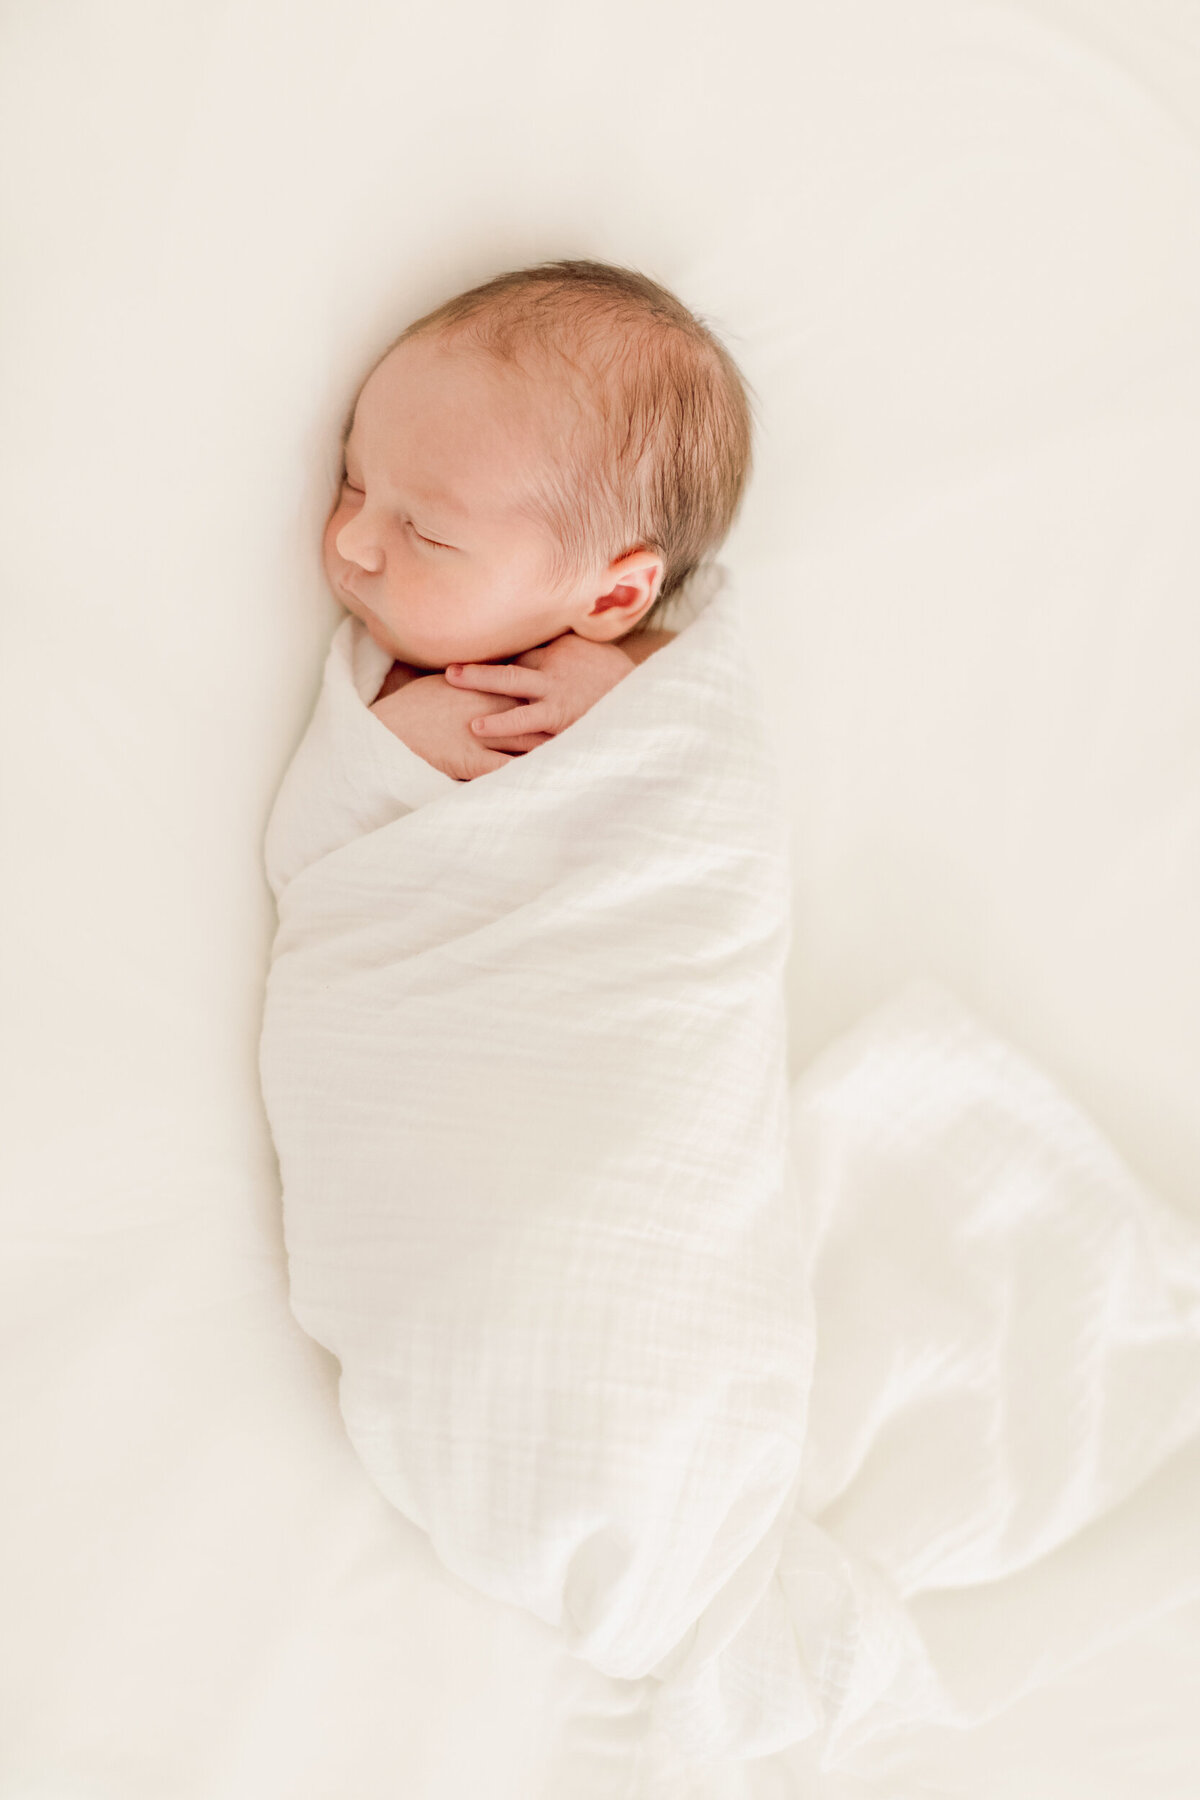 Winston-Salem-Newborn-Photographer37